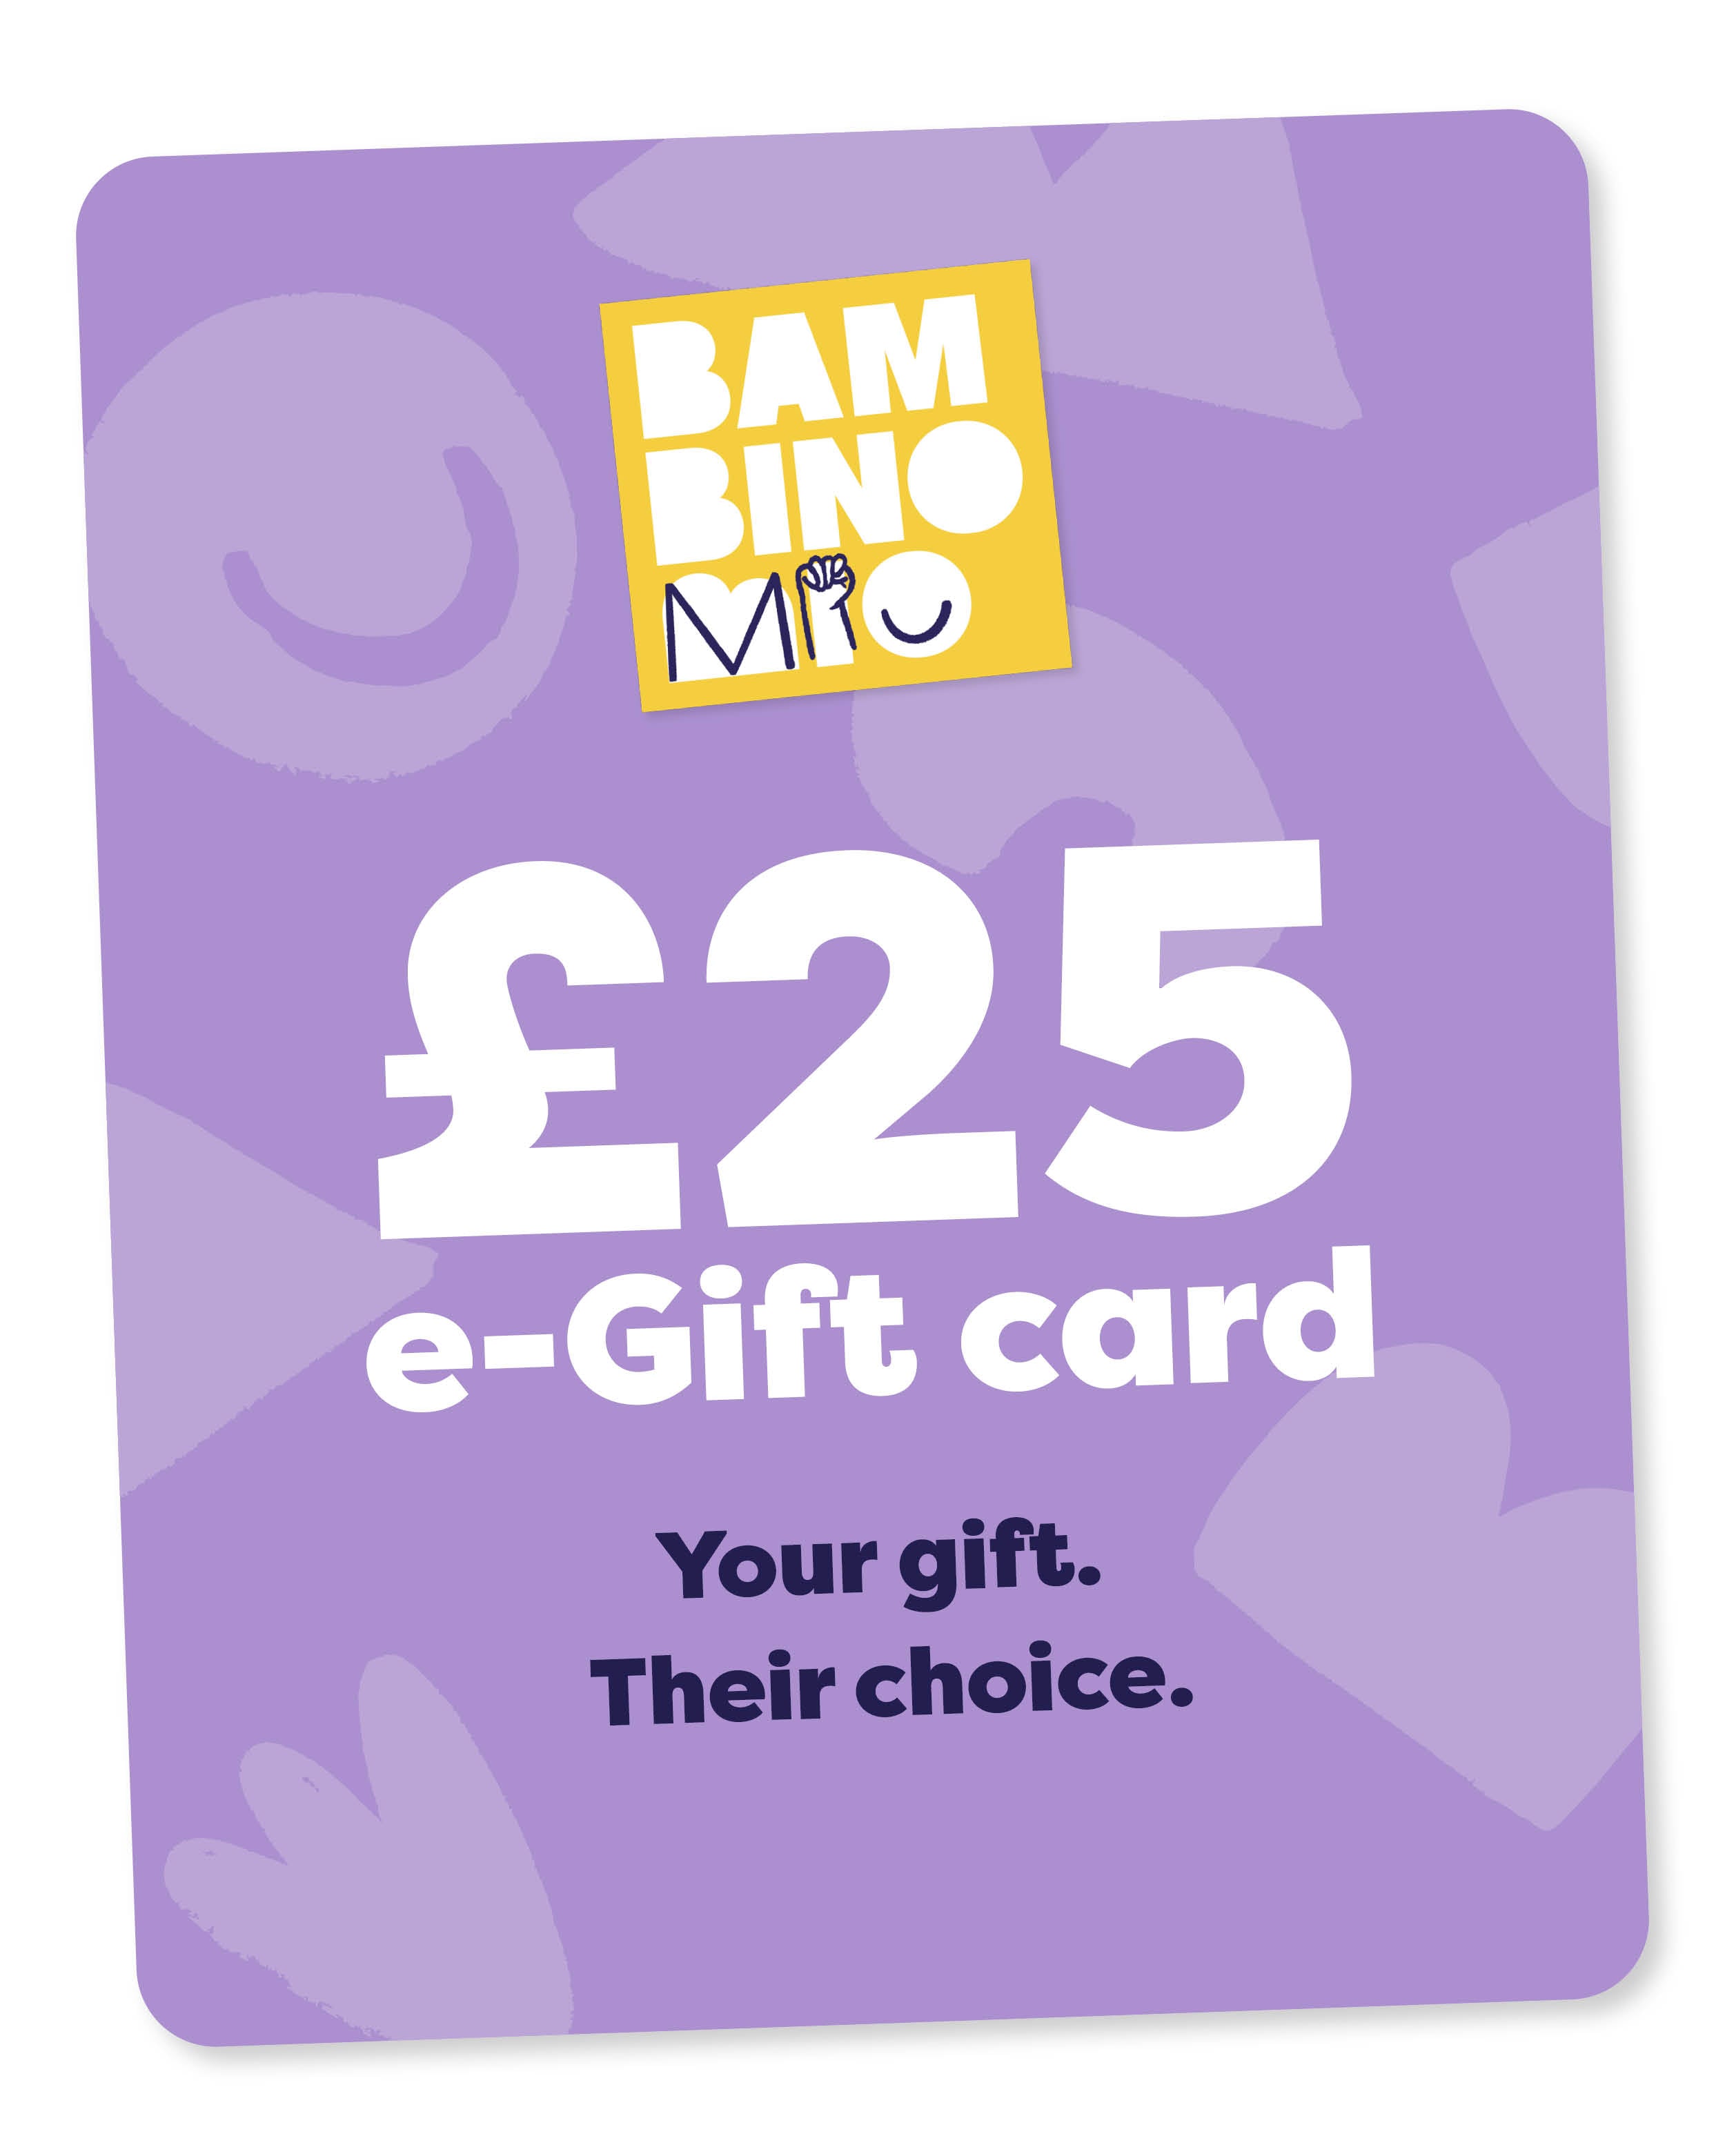 Bambino Mio e-gift card - Bambino Mio (UK & IE)